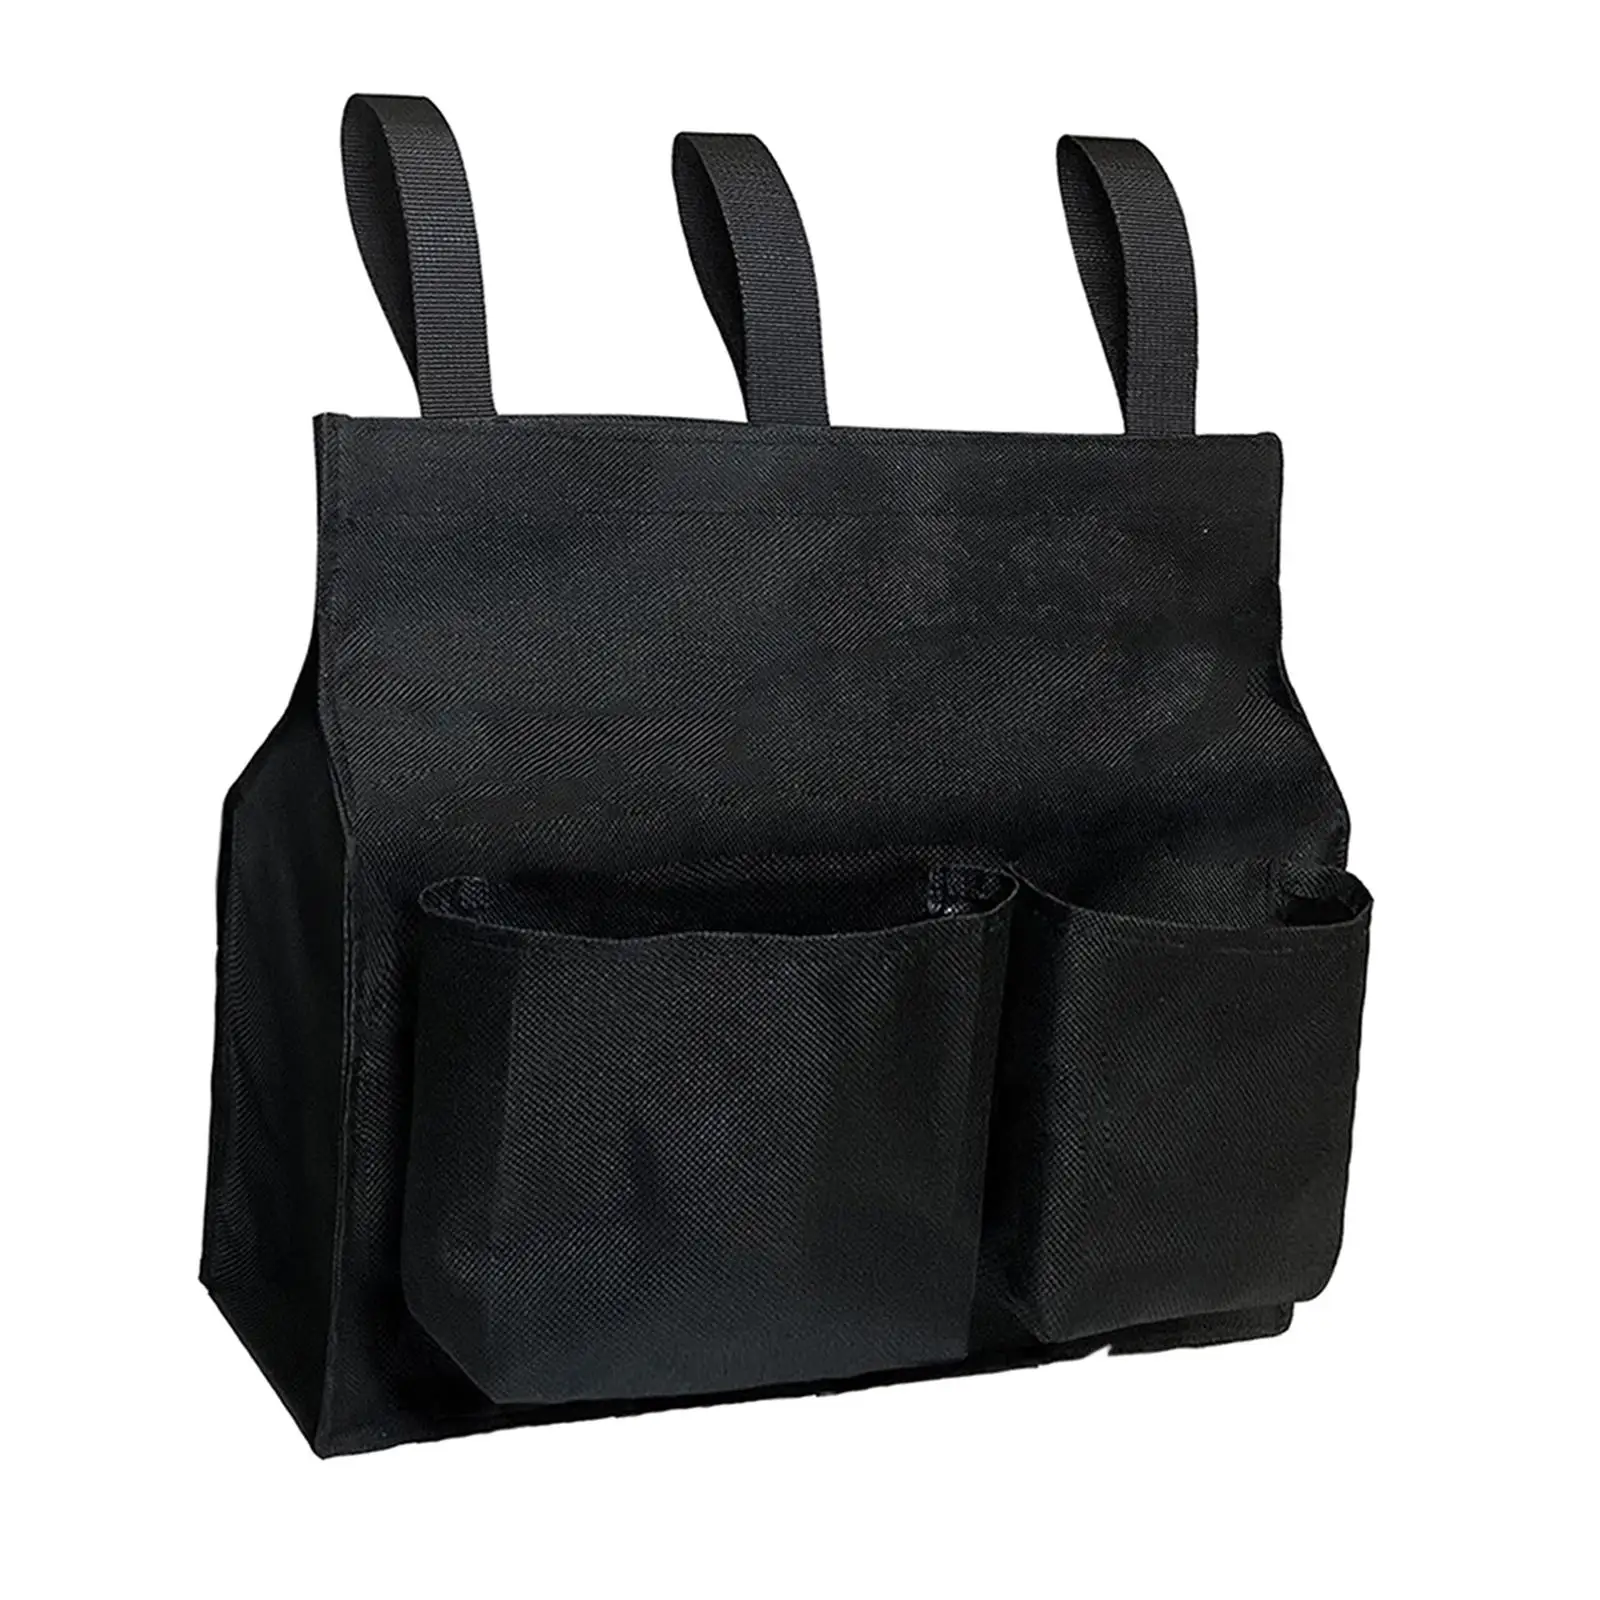 Softball Umpire Ball Bag Wear Resistant Durable with Pockets Oxford Fabric Black Umpire Equipment for Baseball Softball Referee